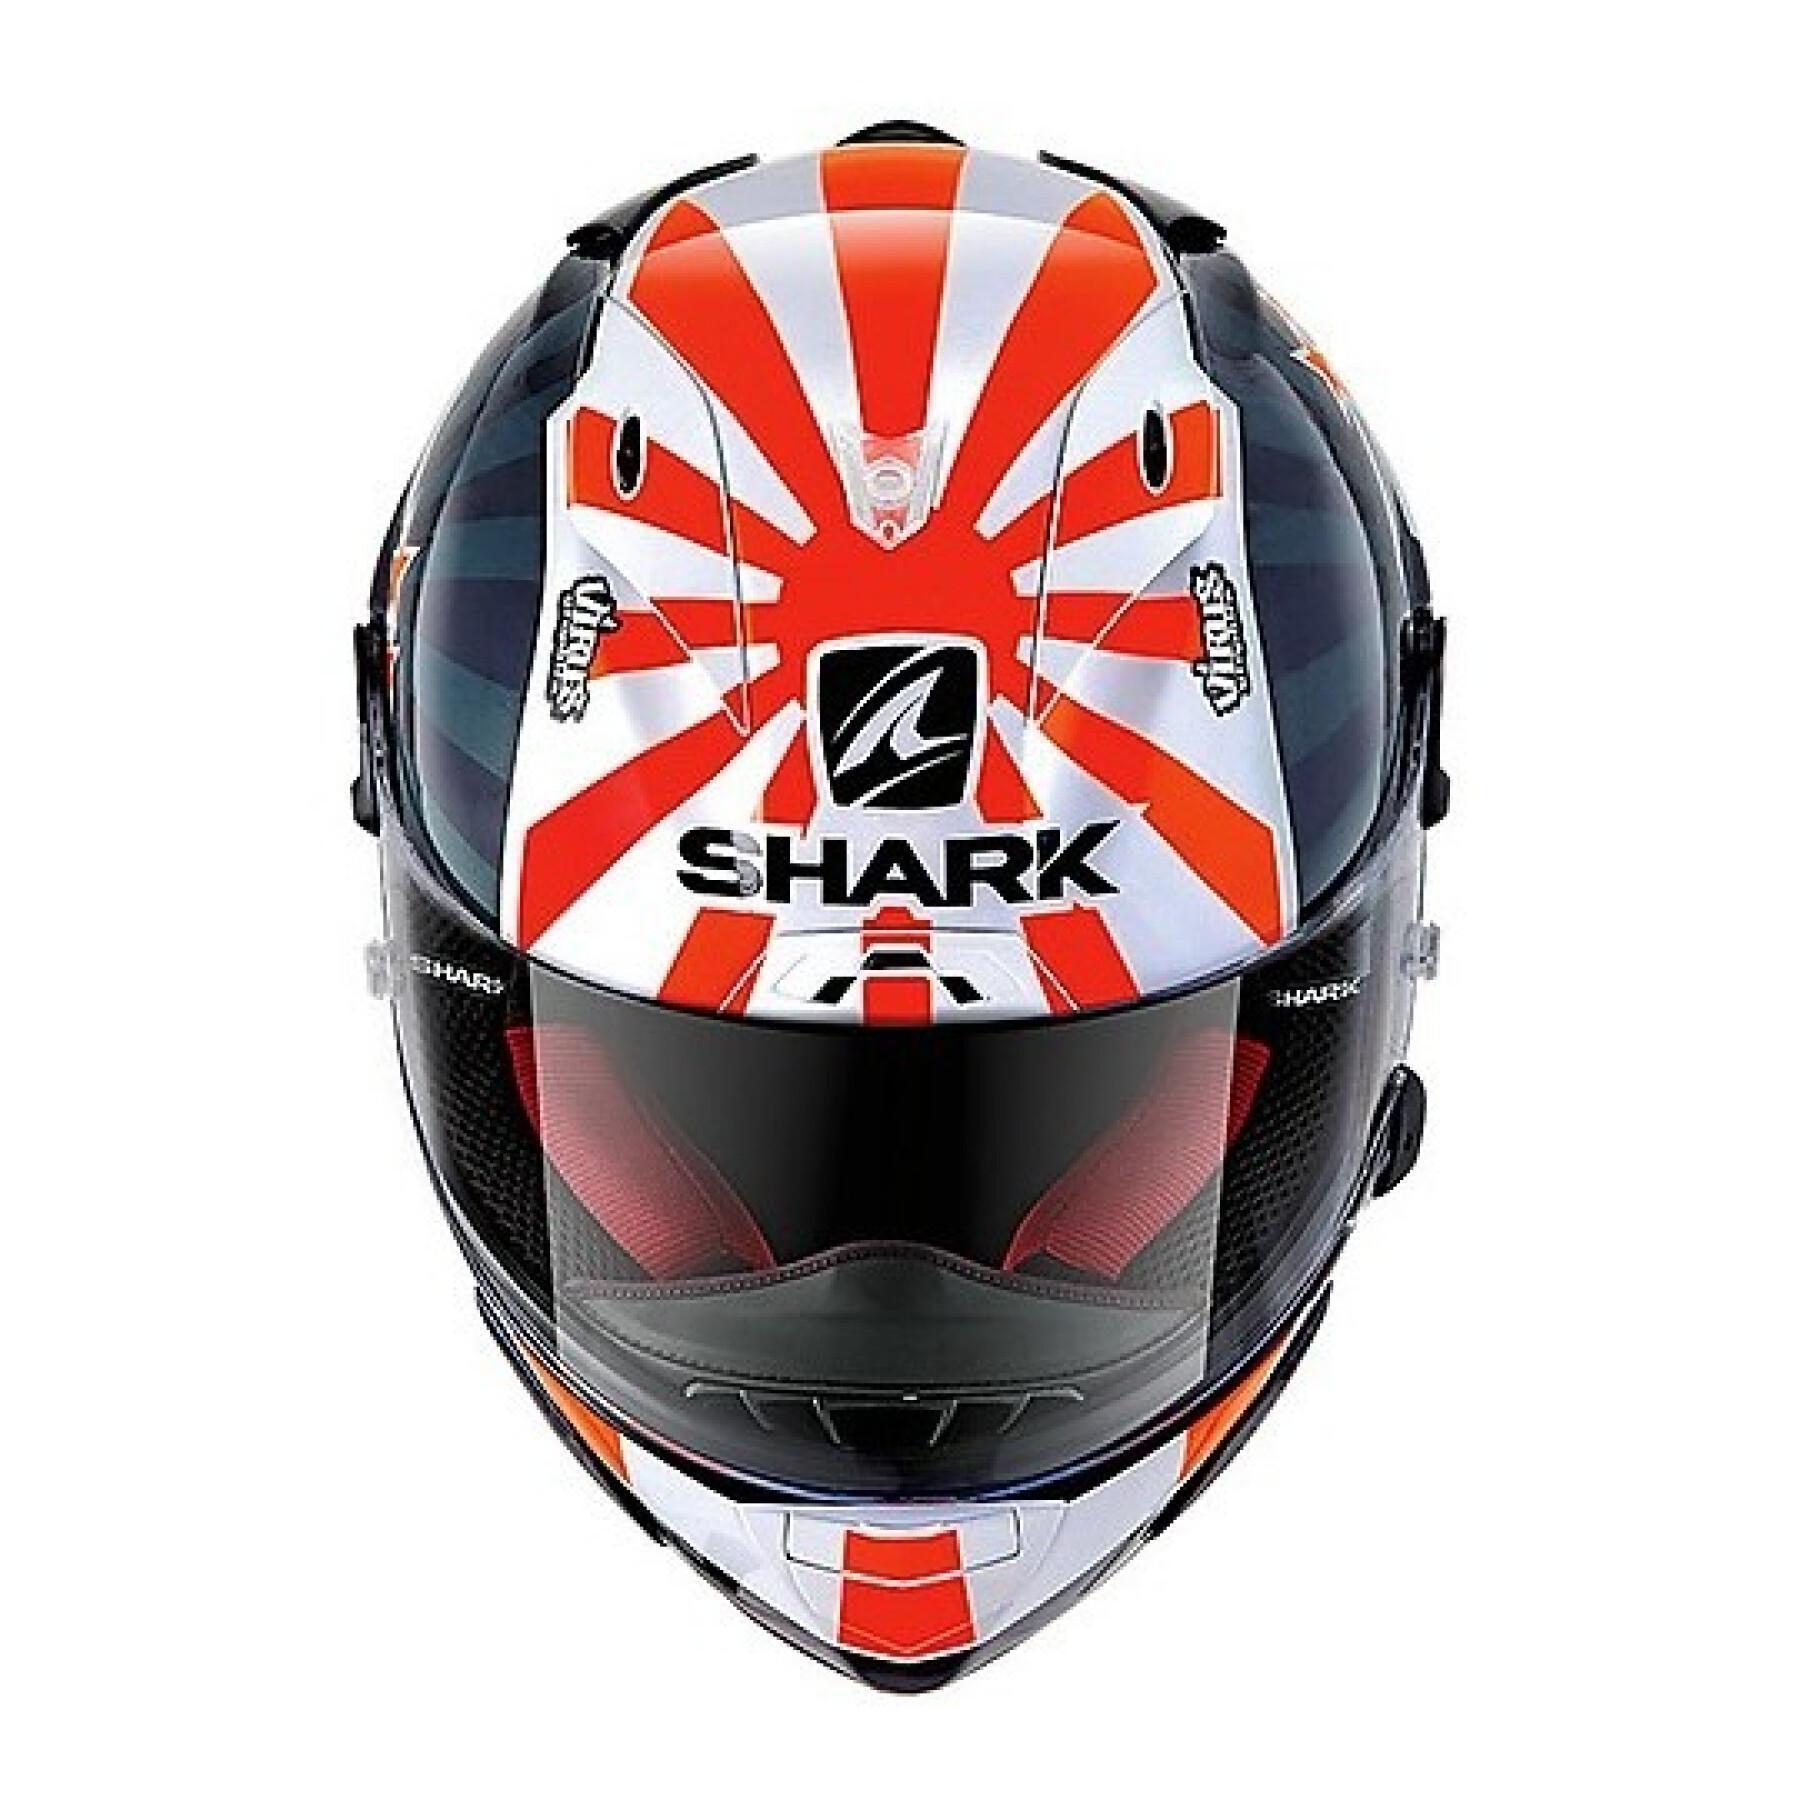 Casque moto intégral Shark race-r pro zarco 2019